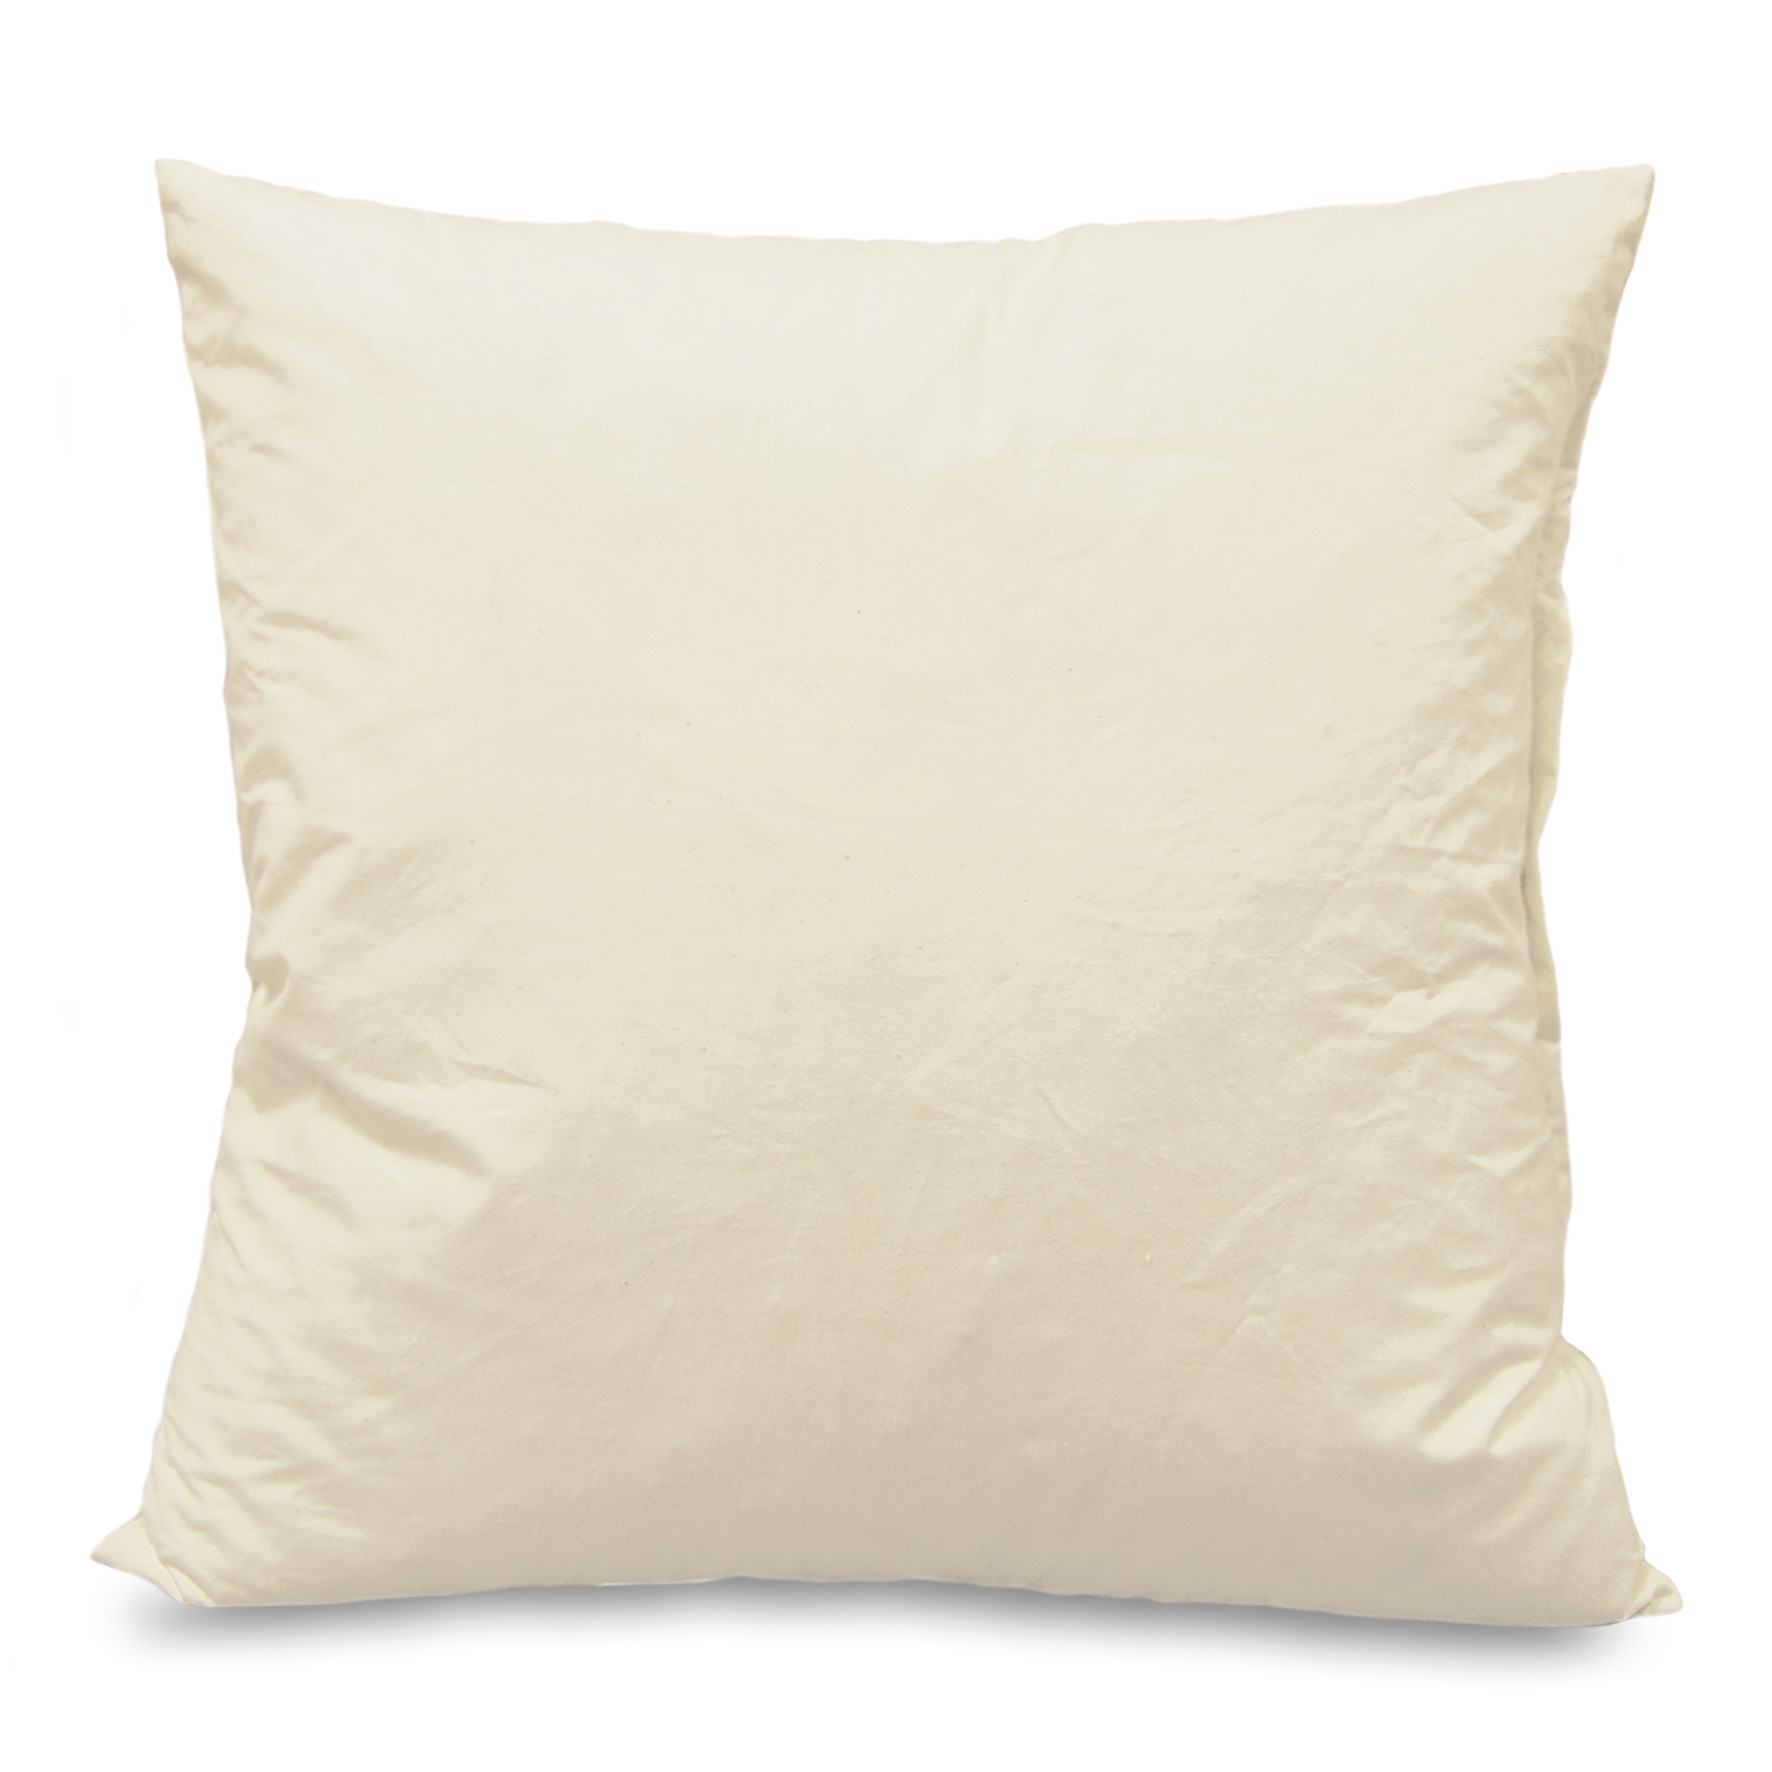 Cushion Insert - 45 x 45cm